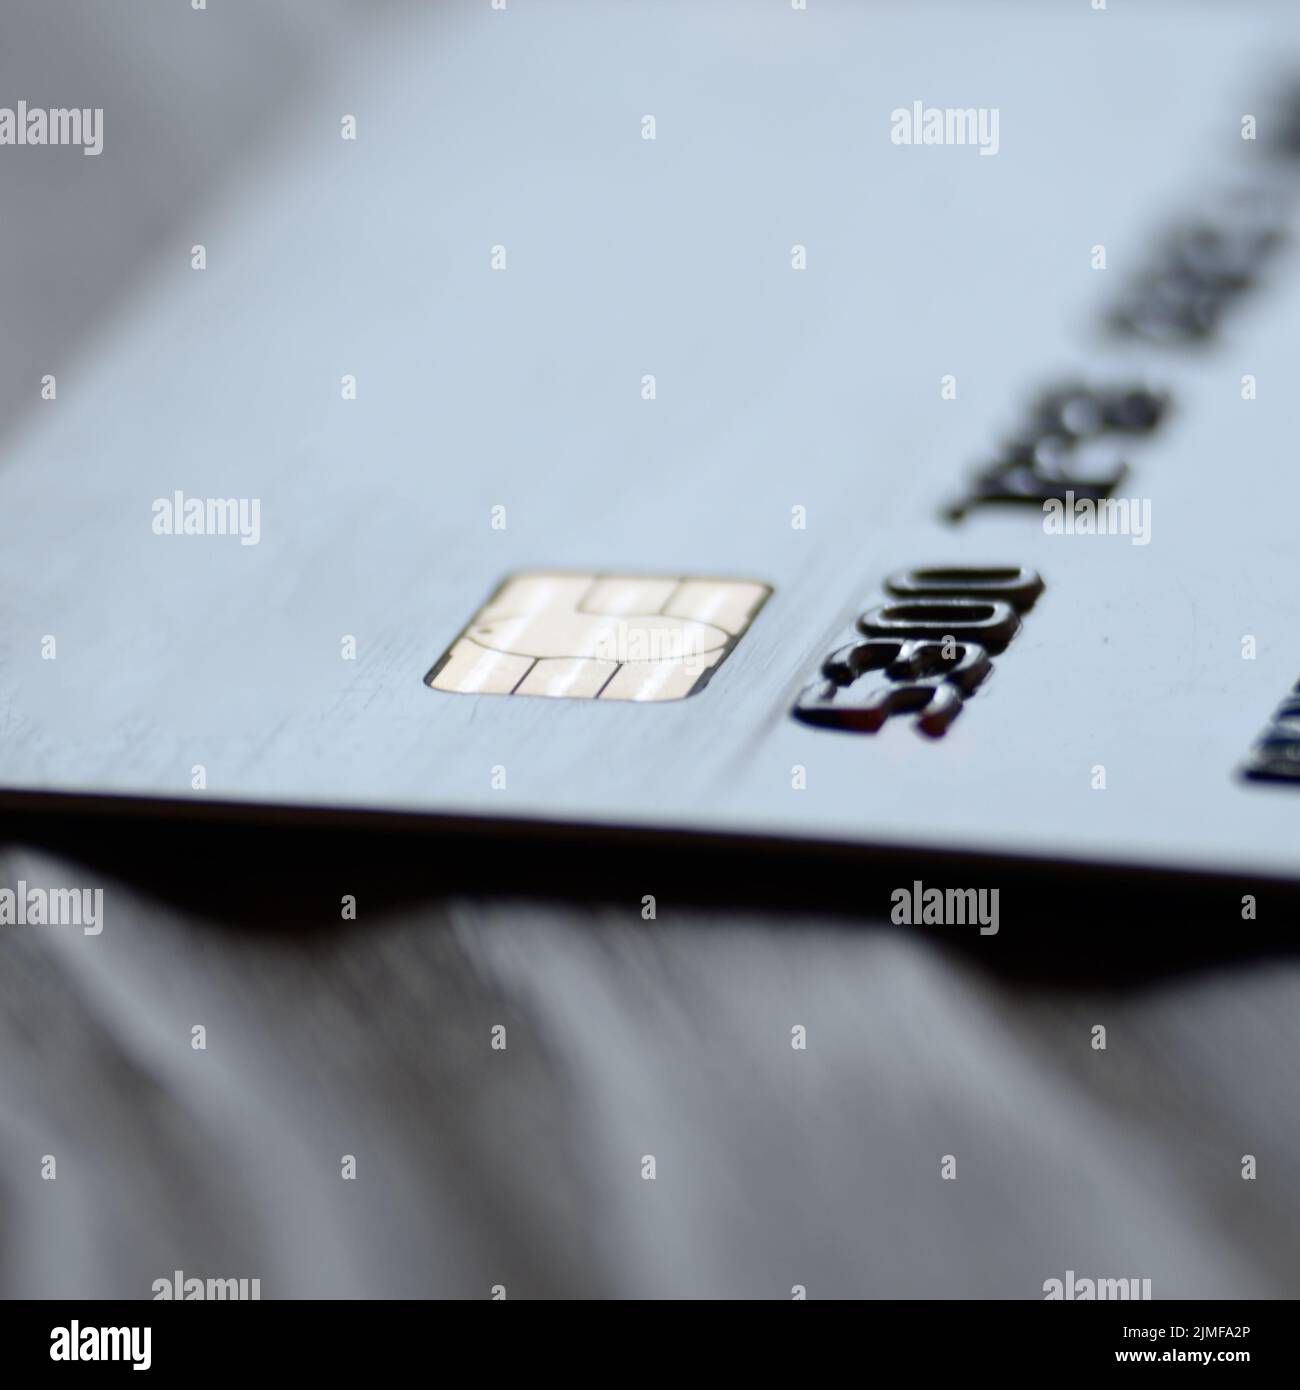 Fotografía macro de tarjeta de crédito o débito con espacio para texto Foto de stock